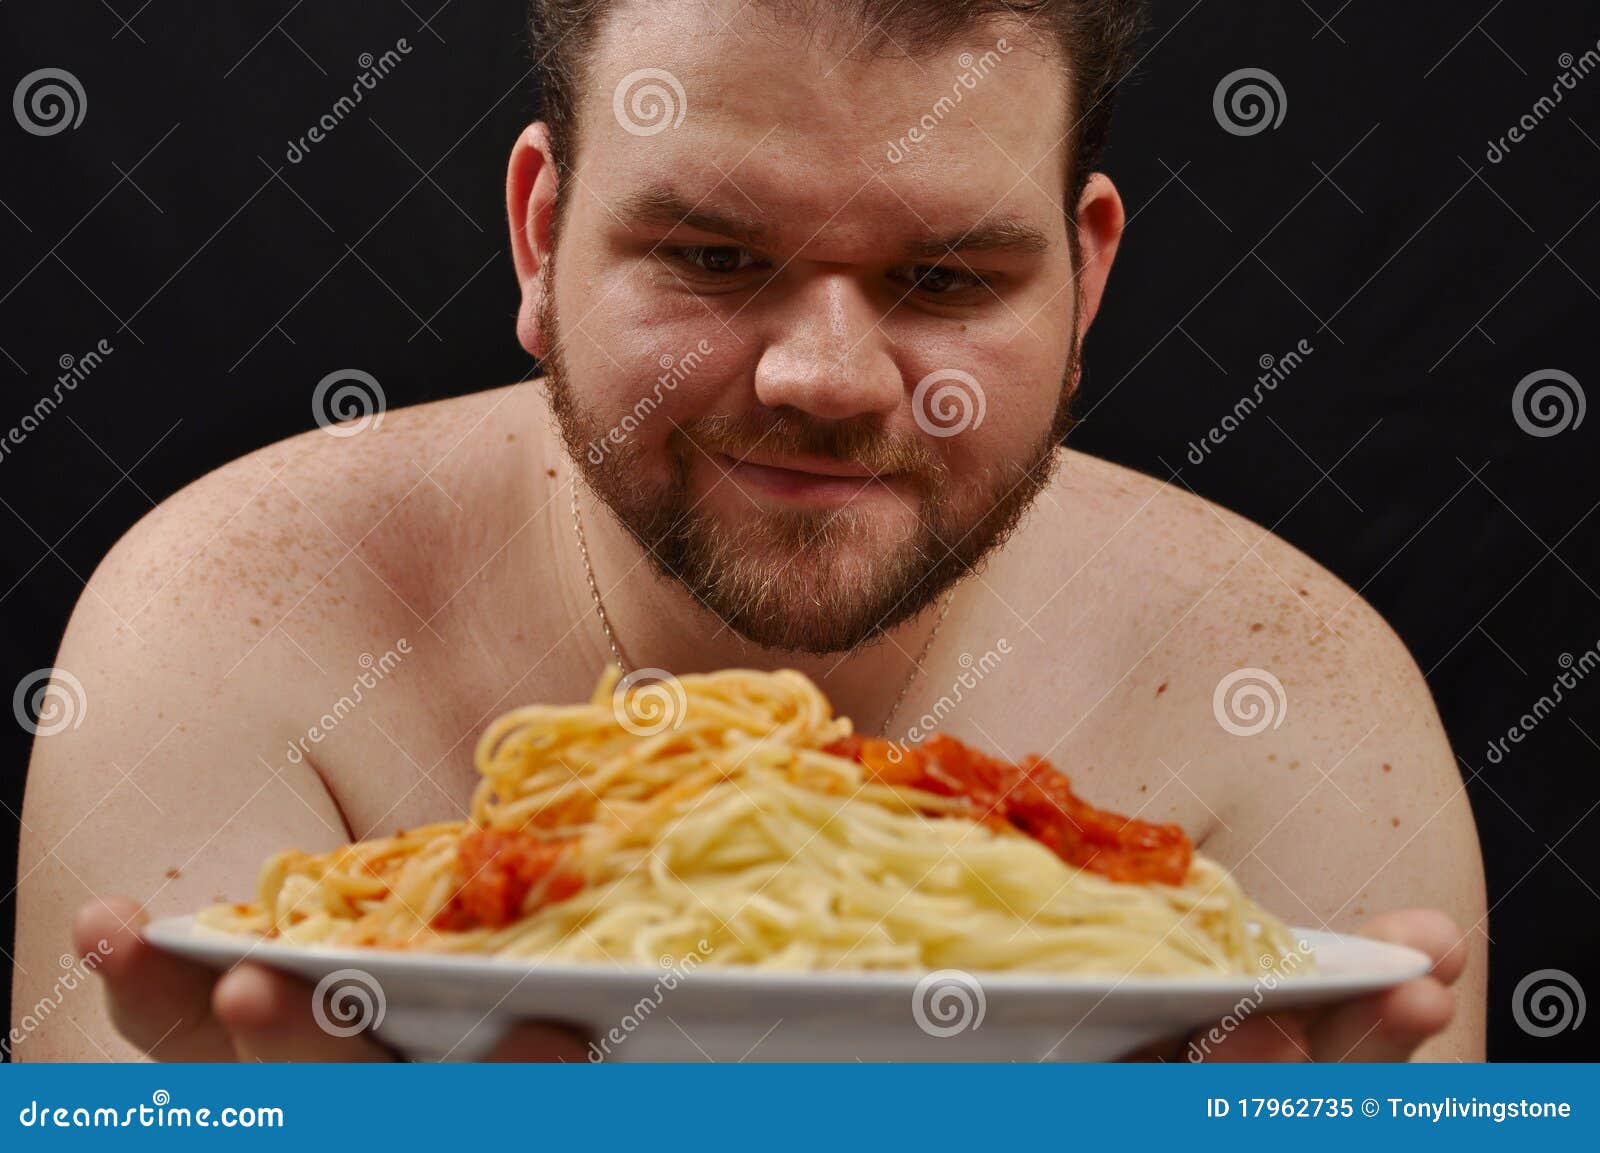 Italian Fat Guy 57